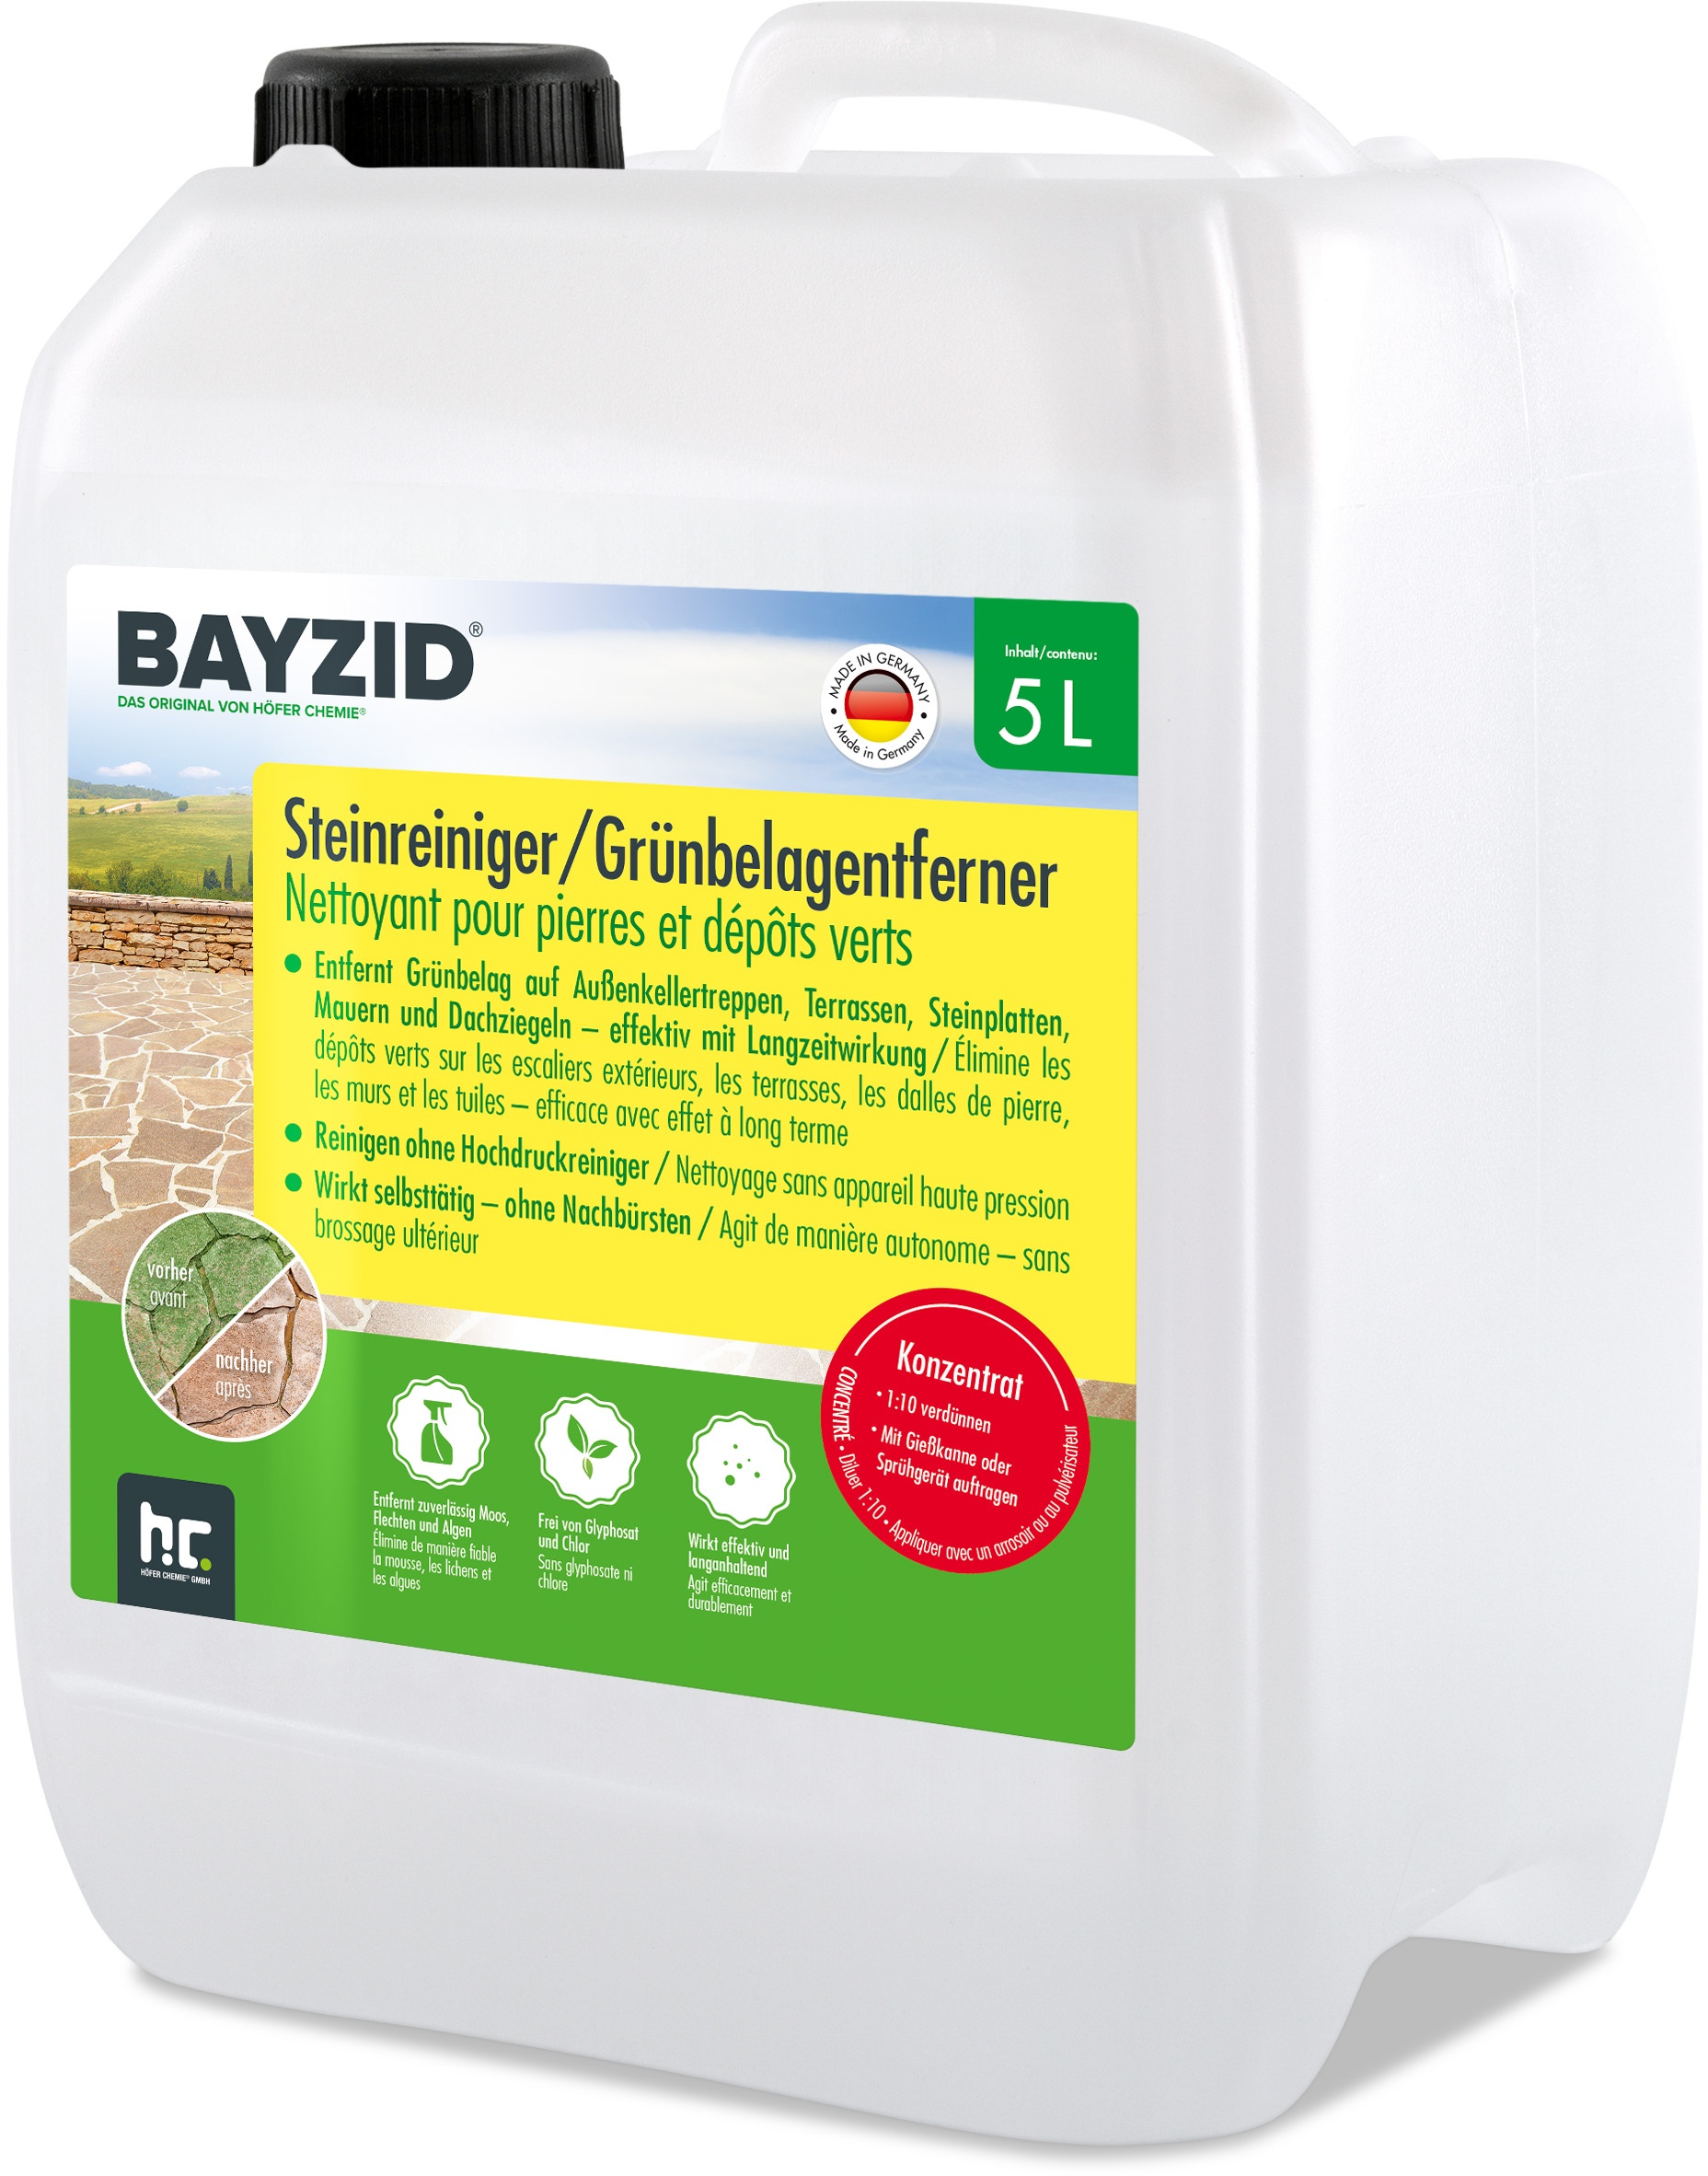 1 x 5 L Bayzid® Steinreiniger / Grünbelag-Entferner